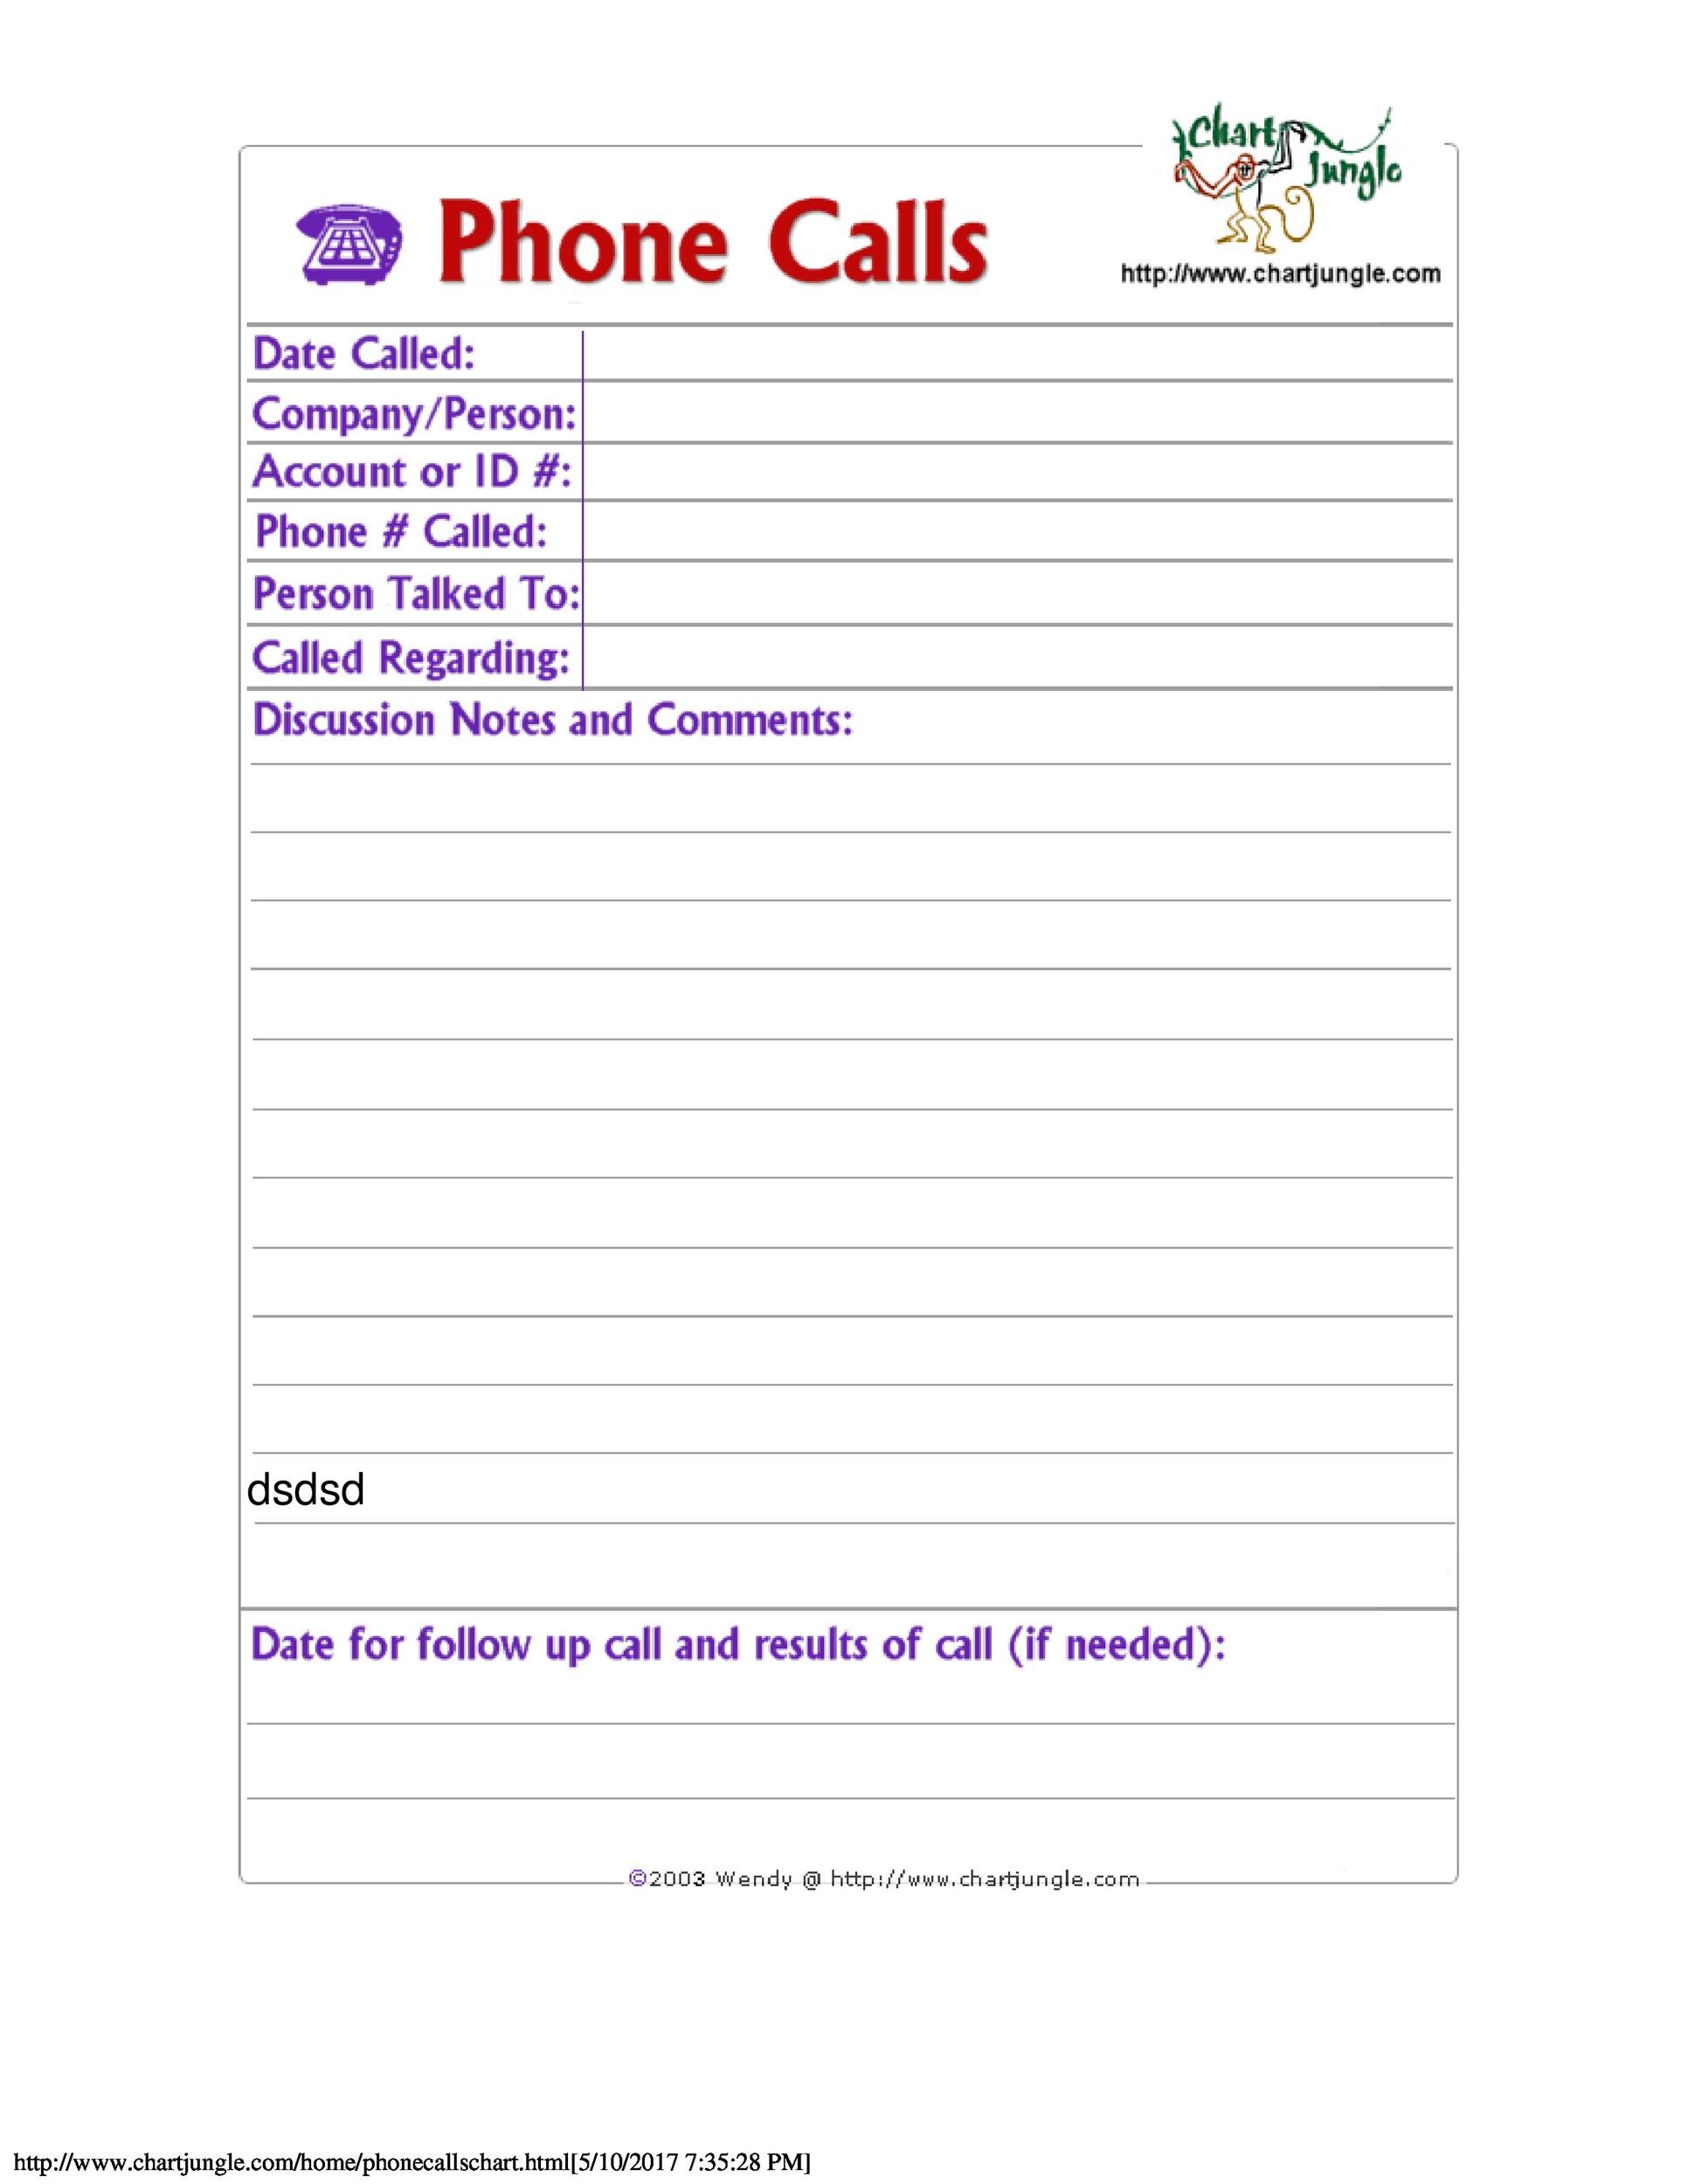 40+ Printable Call Log Templates [Word,Excel,PDF] TemplateLab